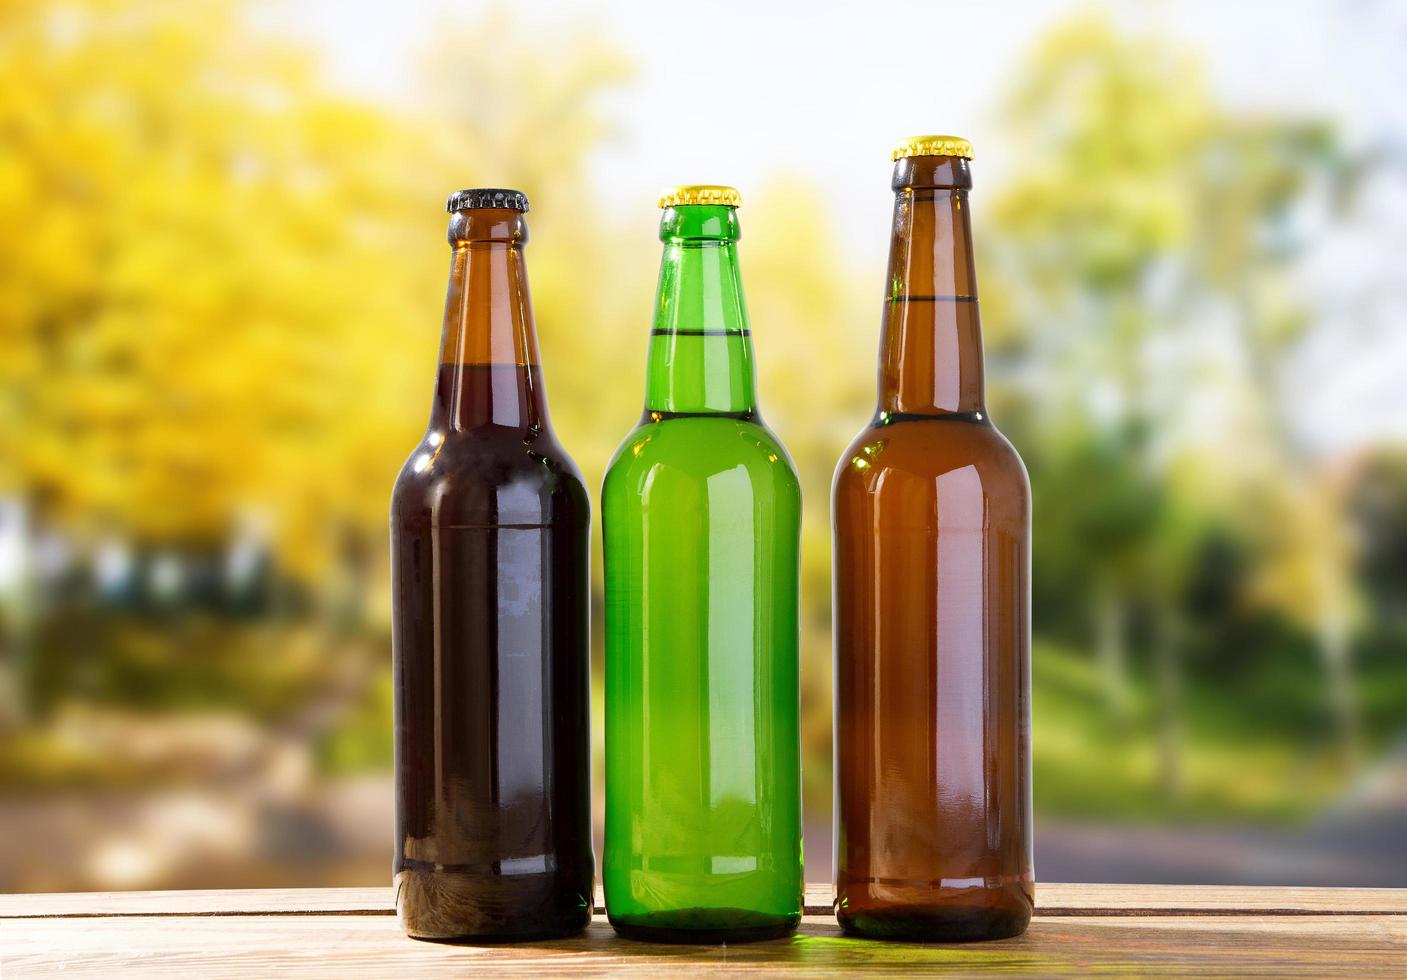 beer bottles on wooden table on blurred park background photo